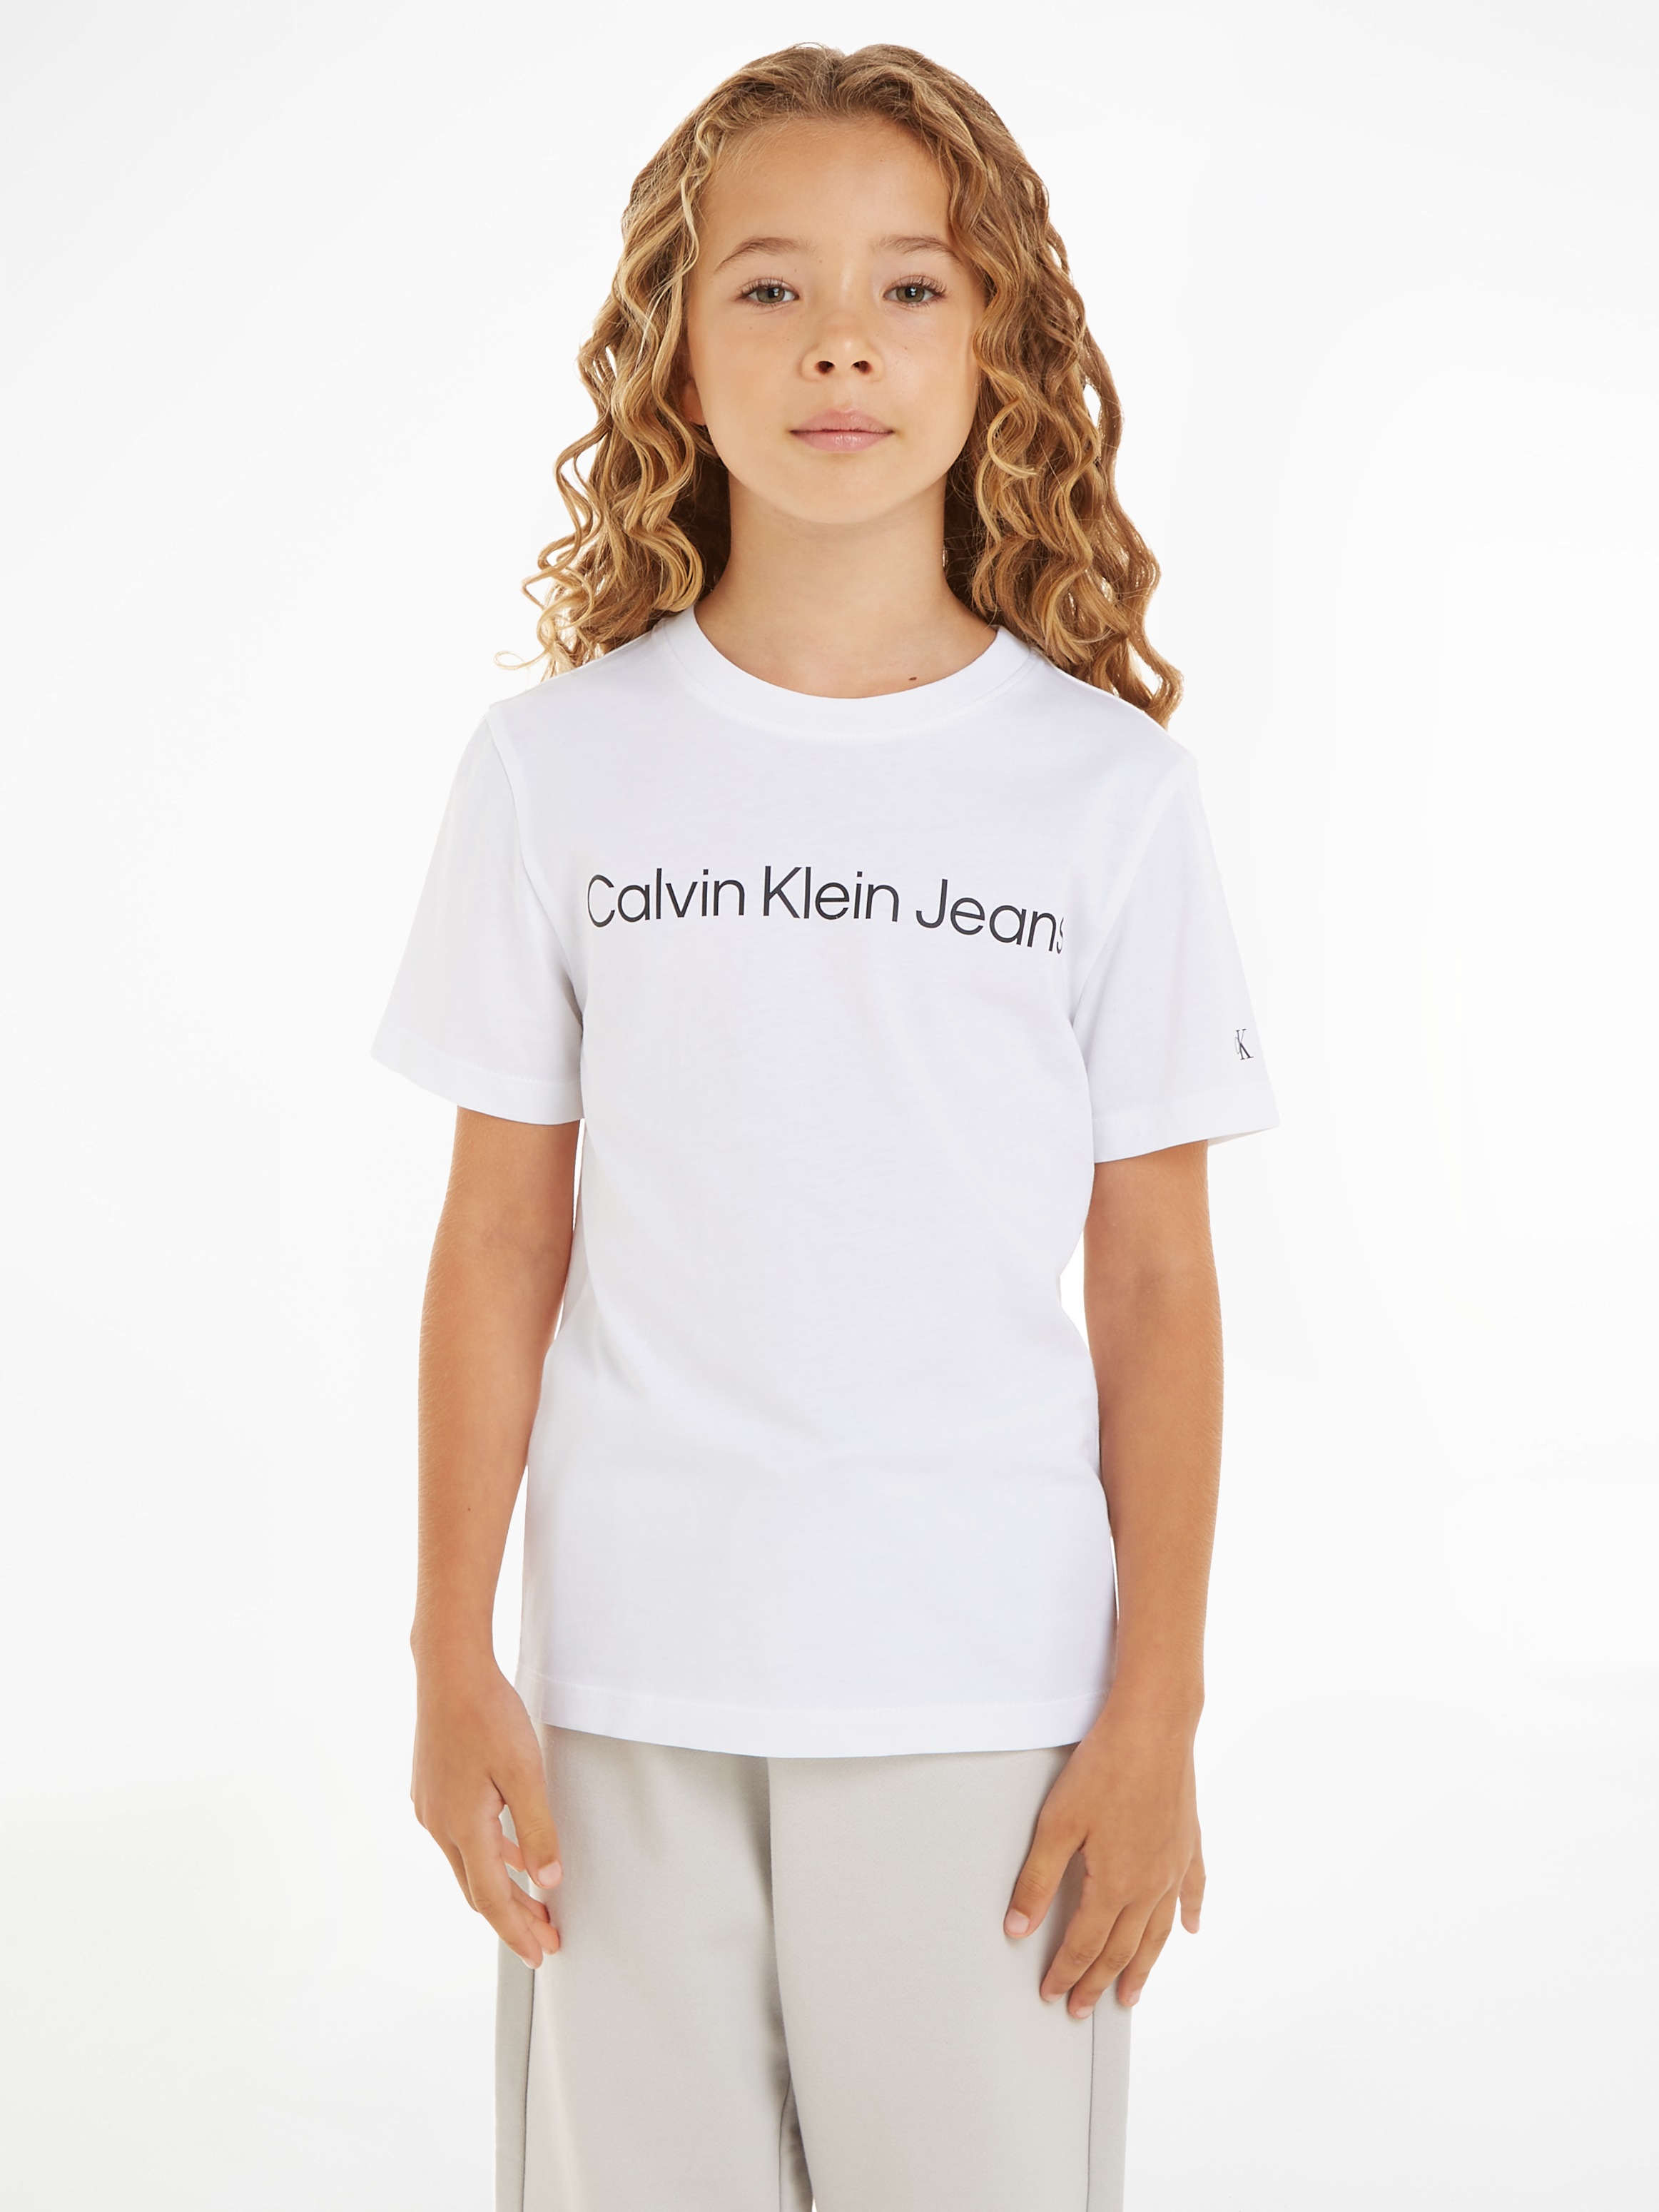 BAUR LOGO »INST. Jeans Sweatshirt T-SHIRT«, SS Logoschriftzug Klein | Calvin Friday Black mit